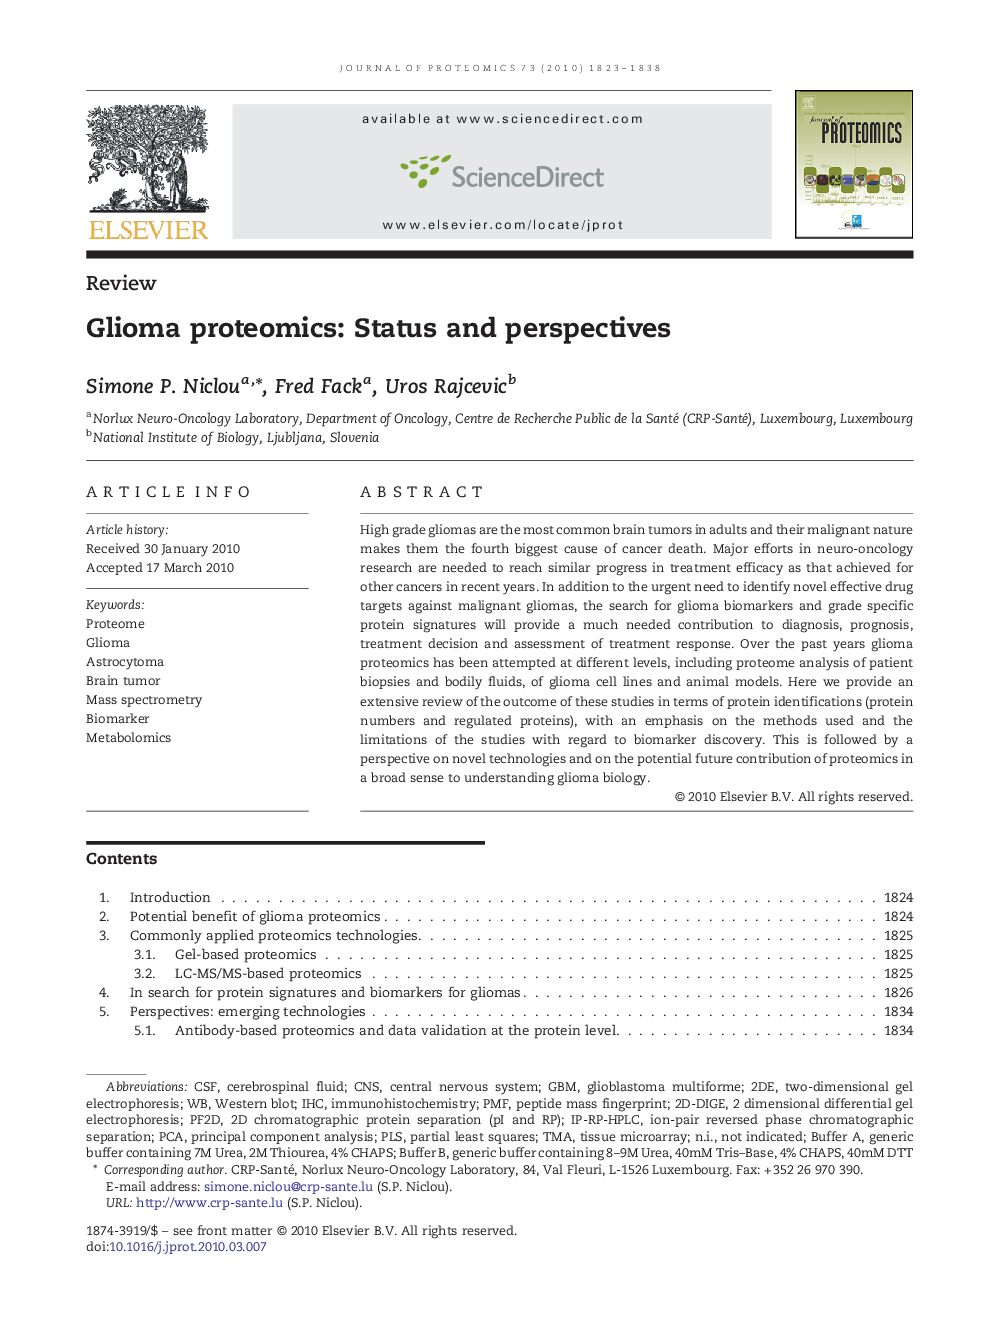 Glioma proteomics: Status and perspectives